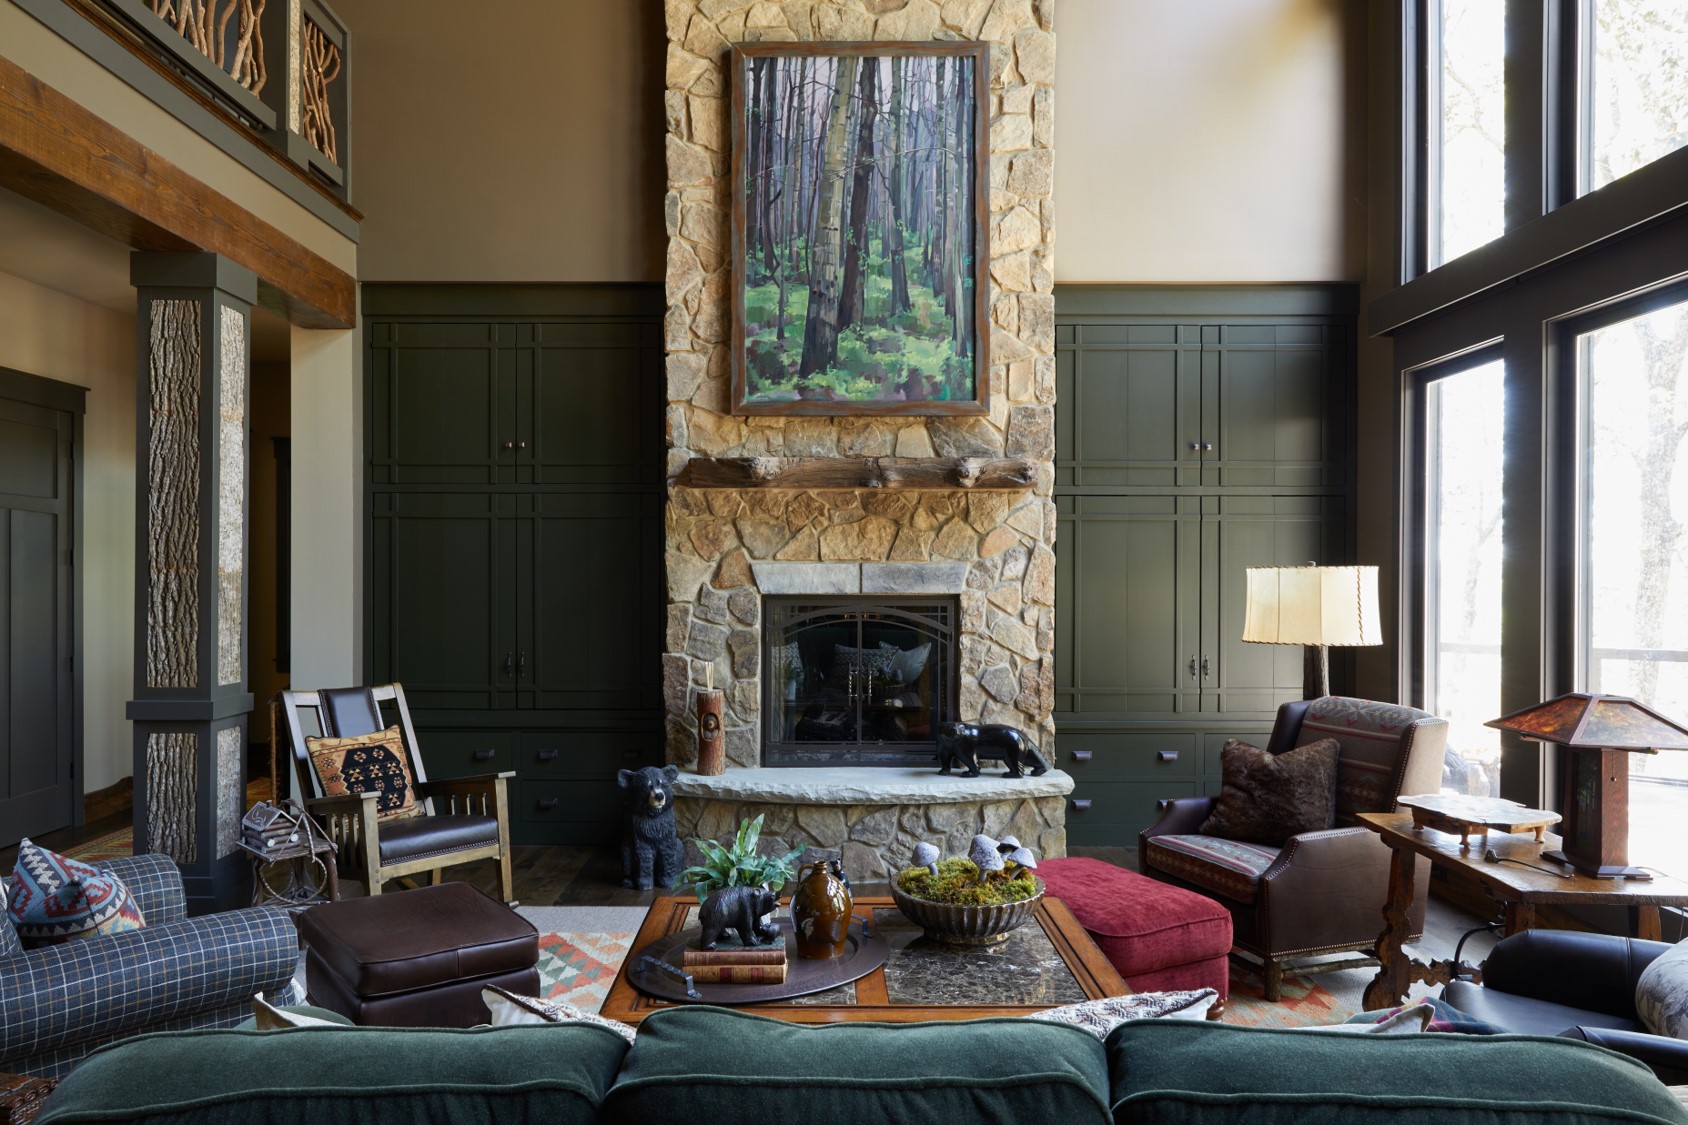 Dark green built-ins. Statement stone fireplace. Big windows with natural lighting